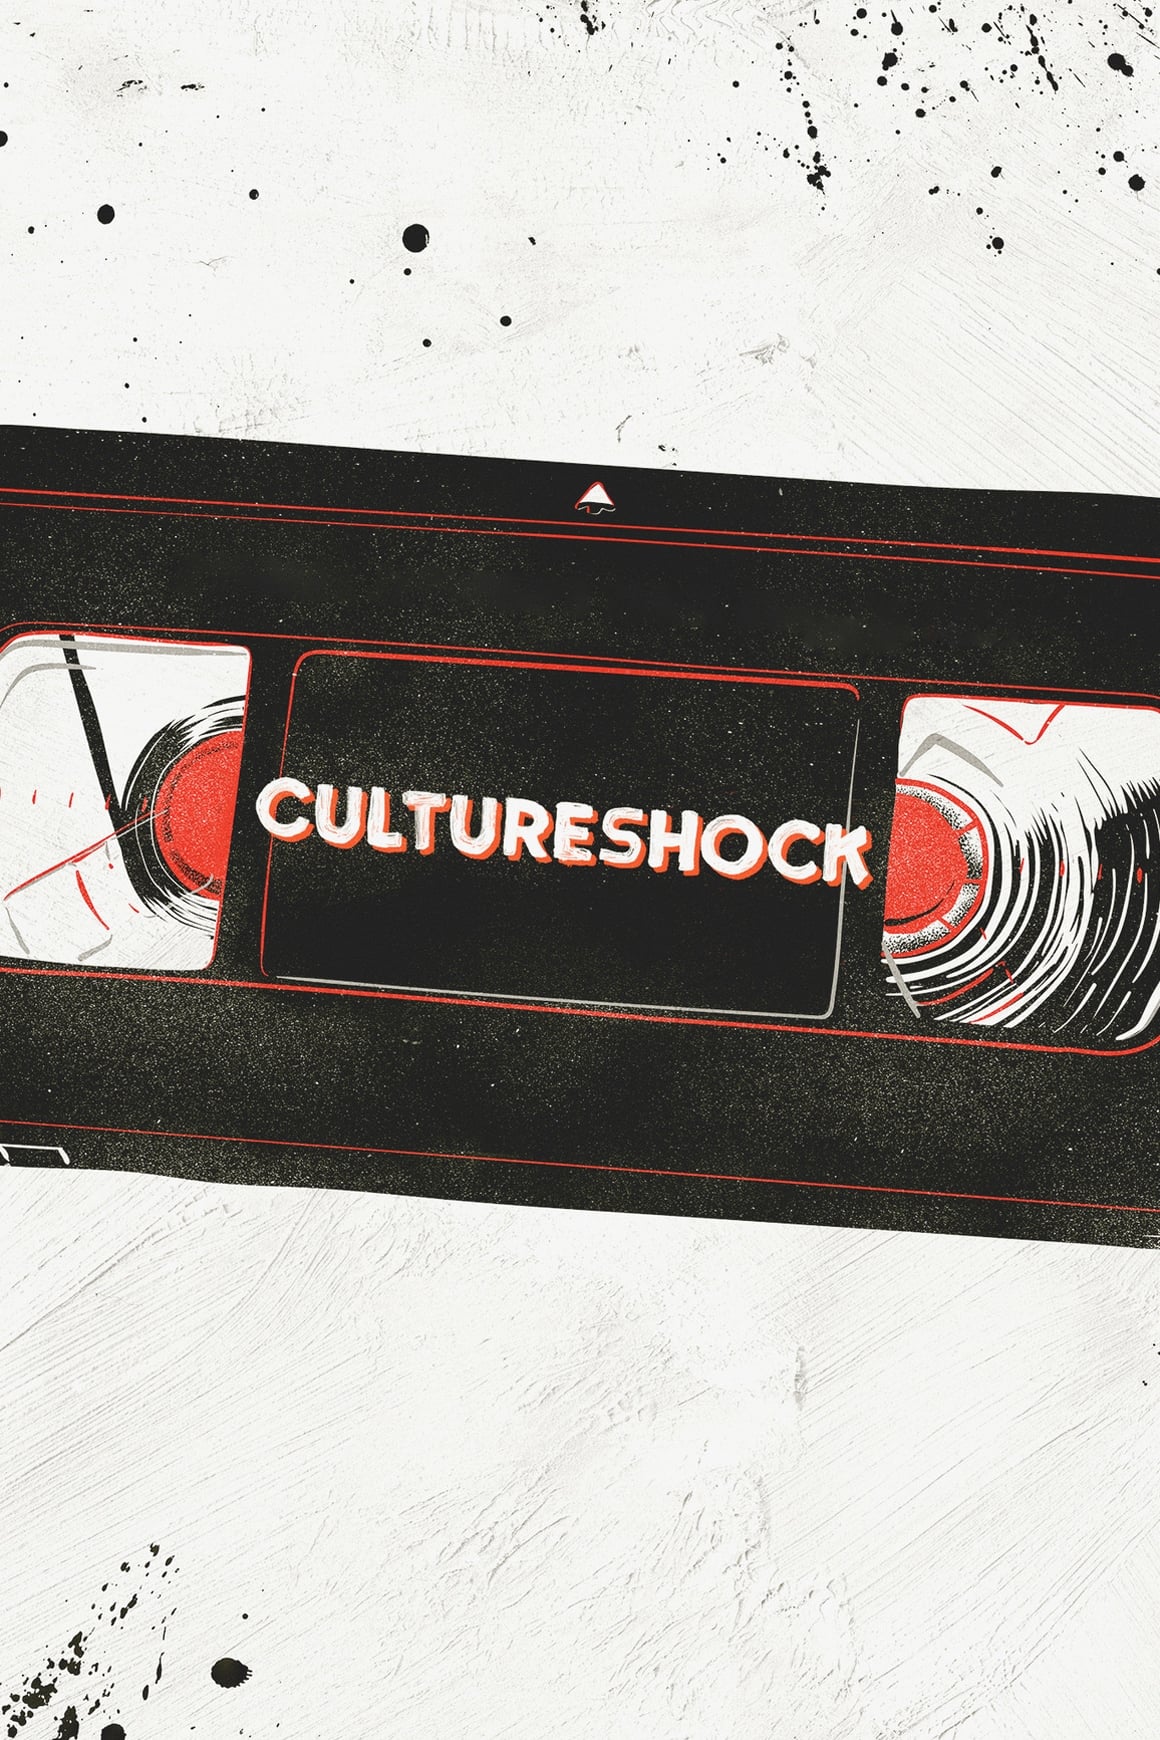 Cultureshock (2018)